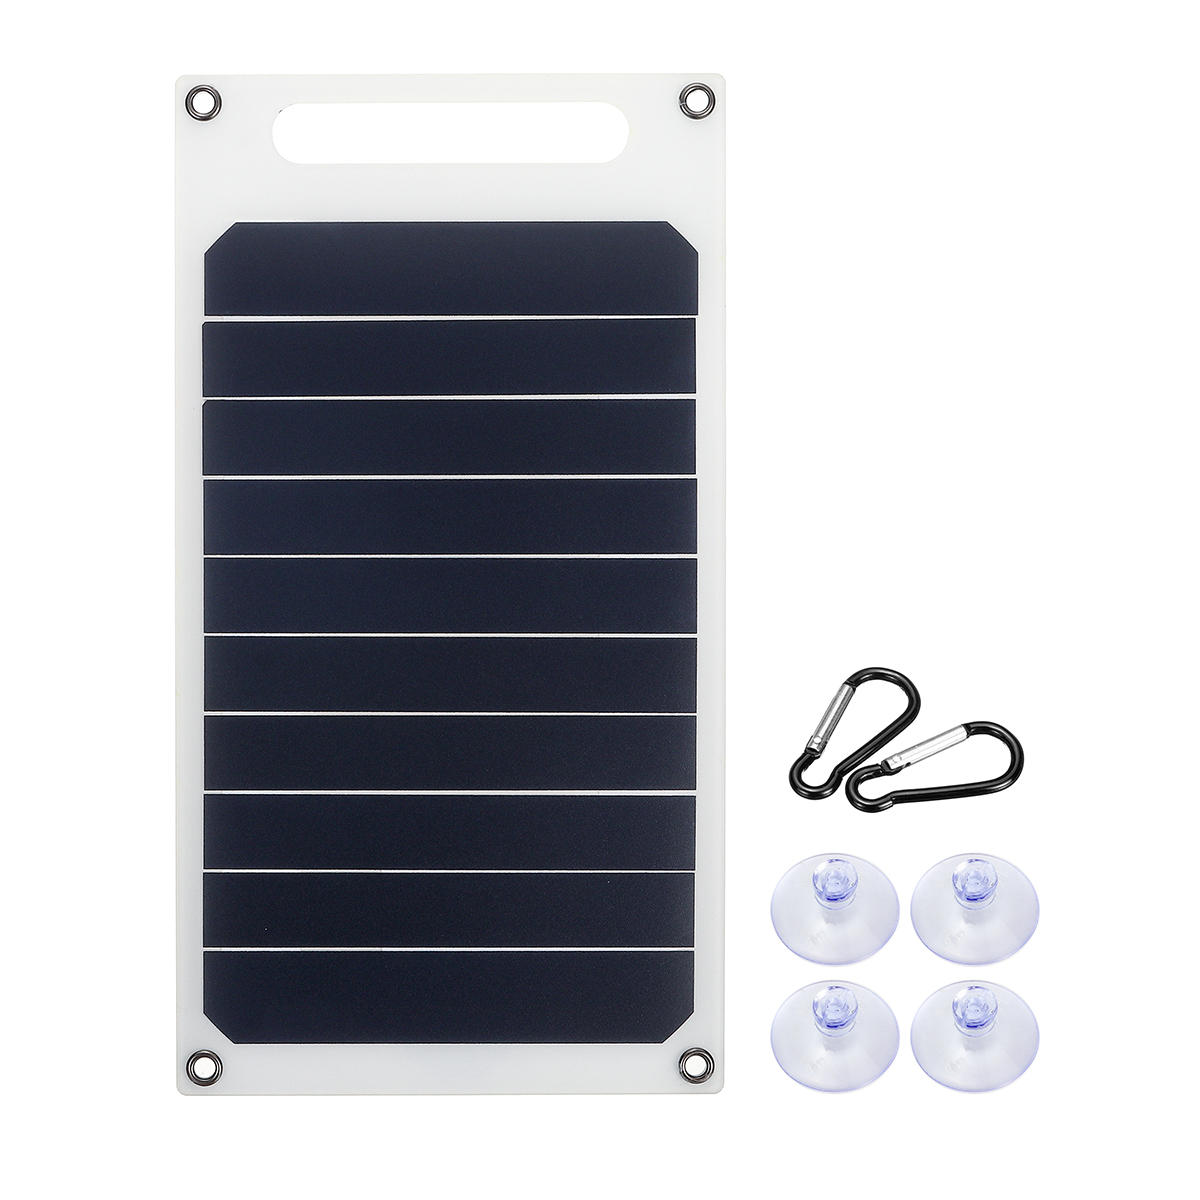 

6V 10W 1.7A Portable Monocrystalline Solar Panel Slim & Light USB Charger Charging Power Bank Pad